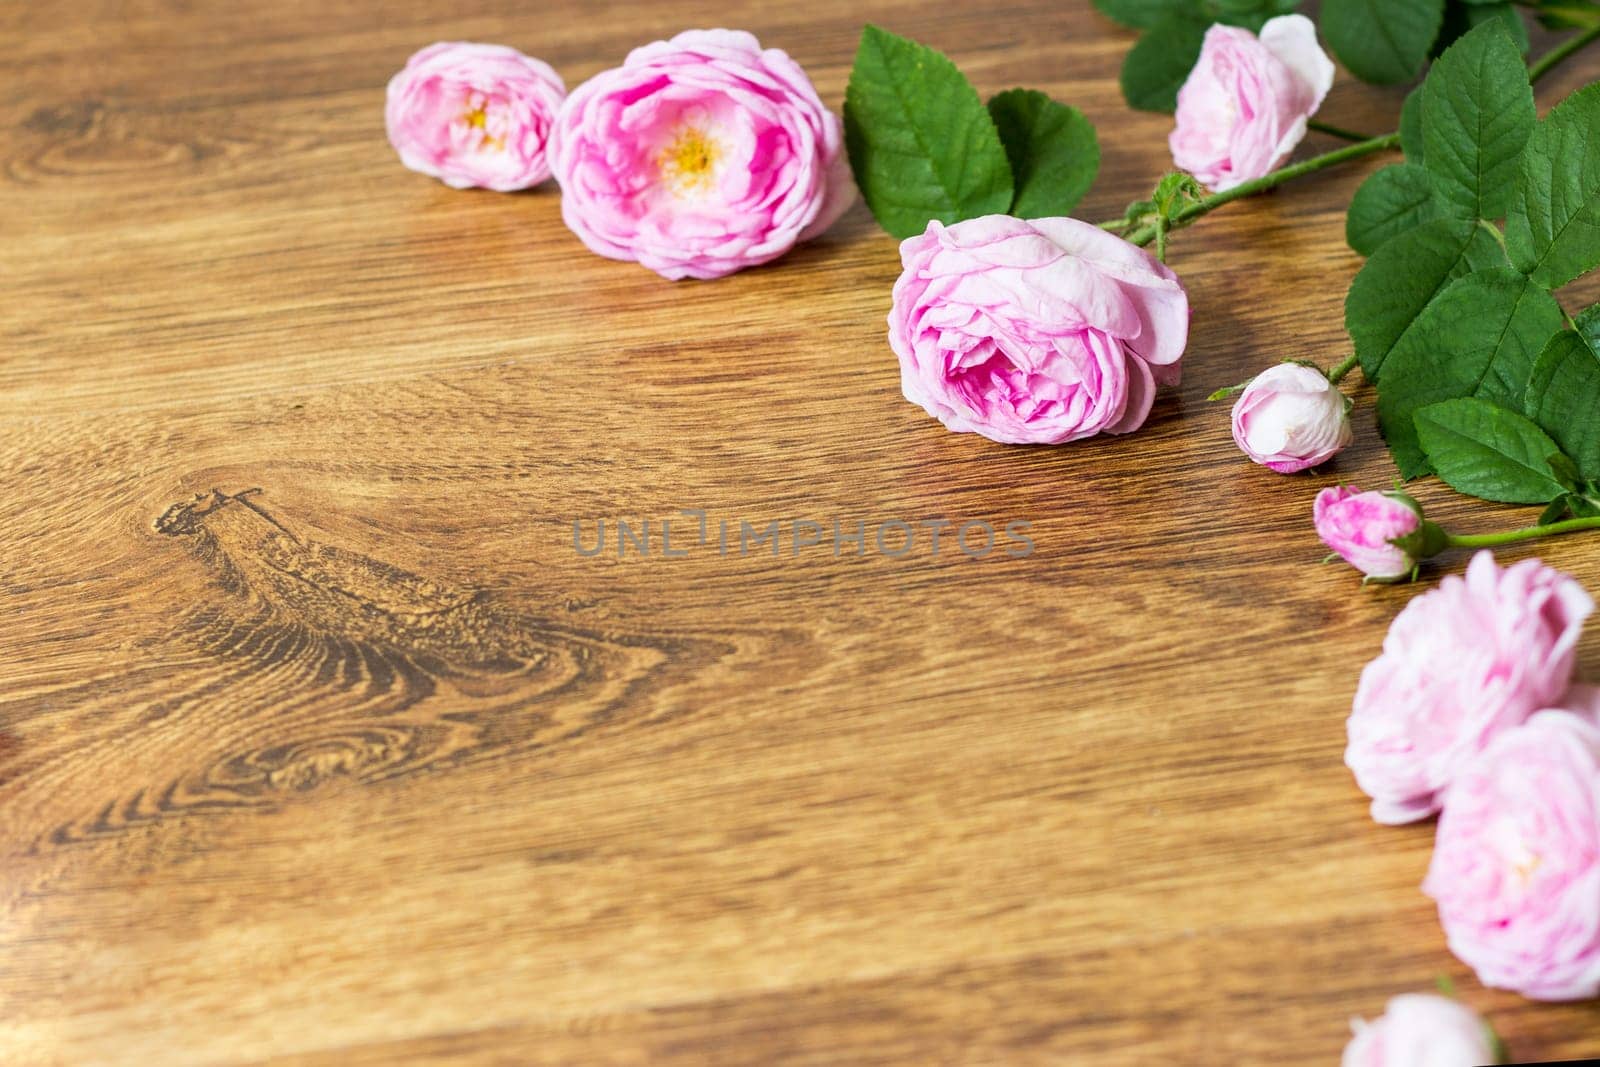 Flower tea rose buds on old wooden table.